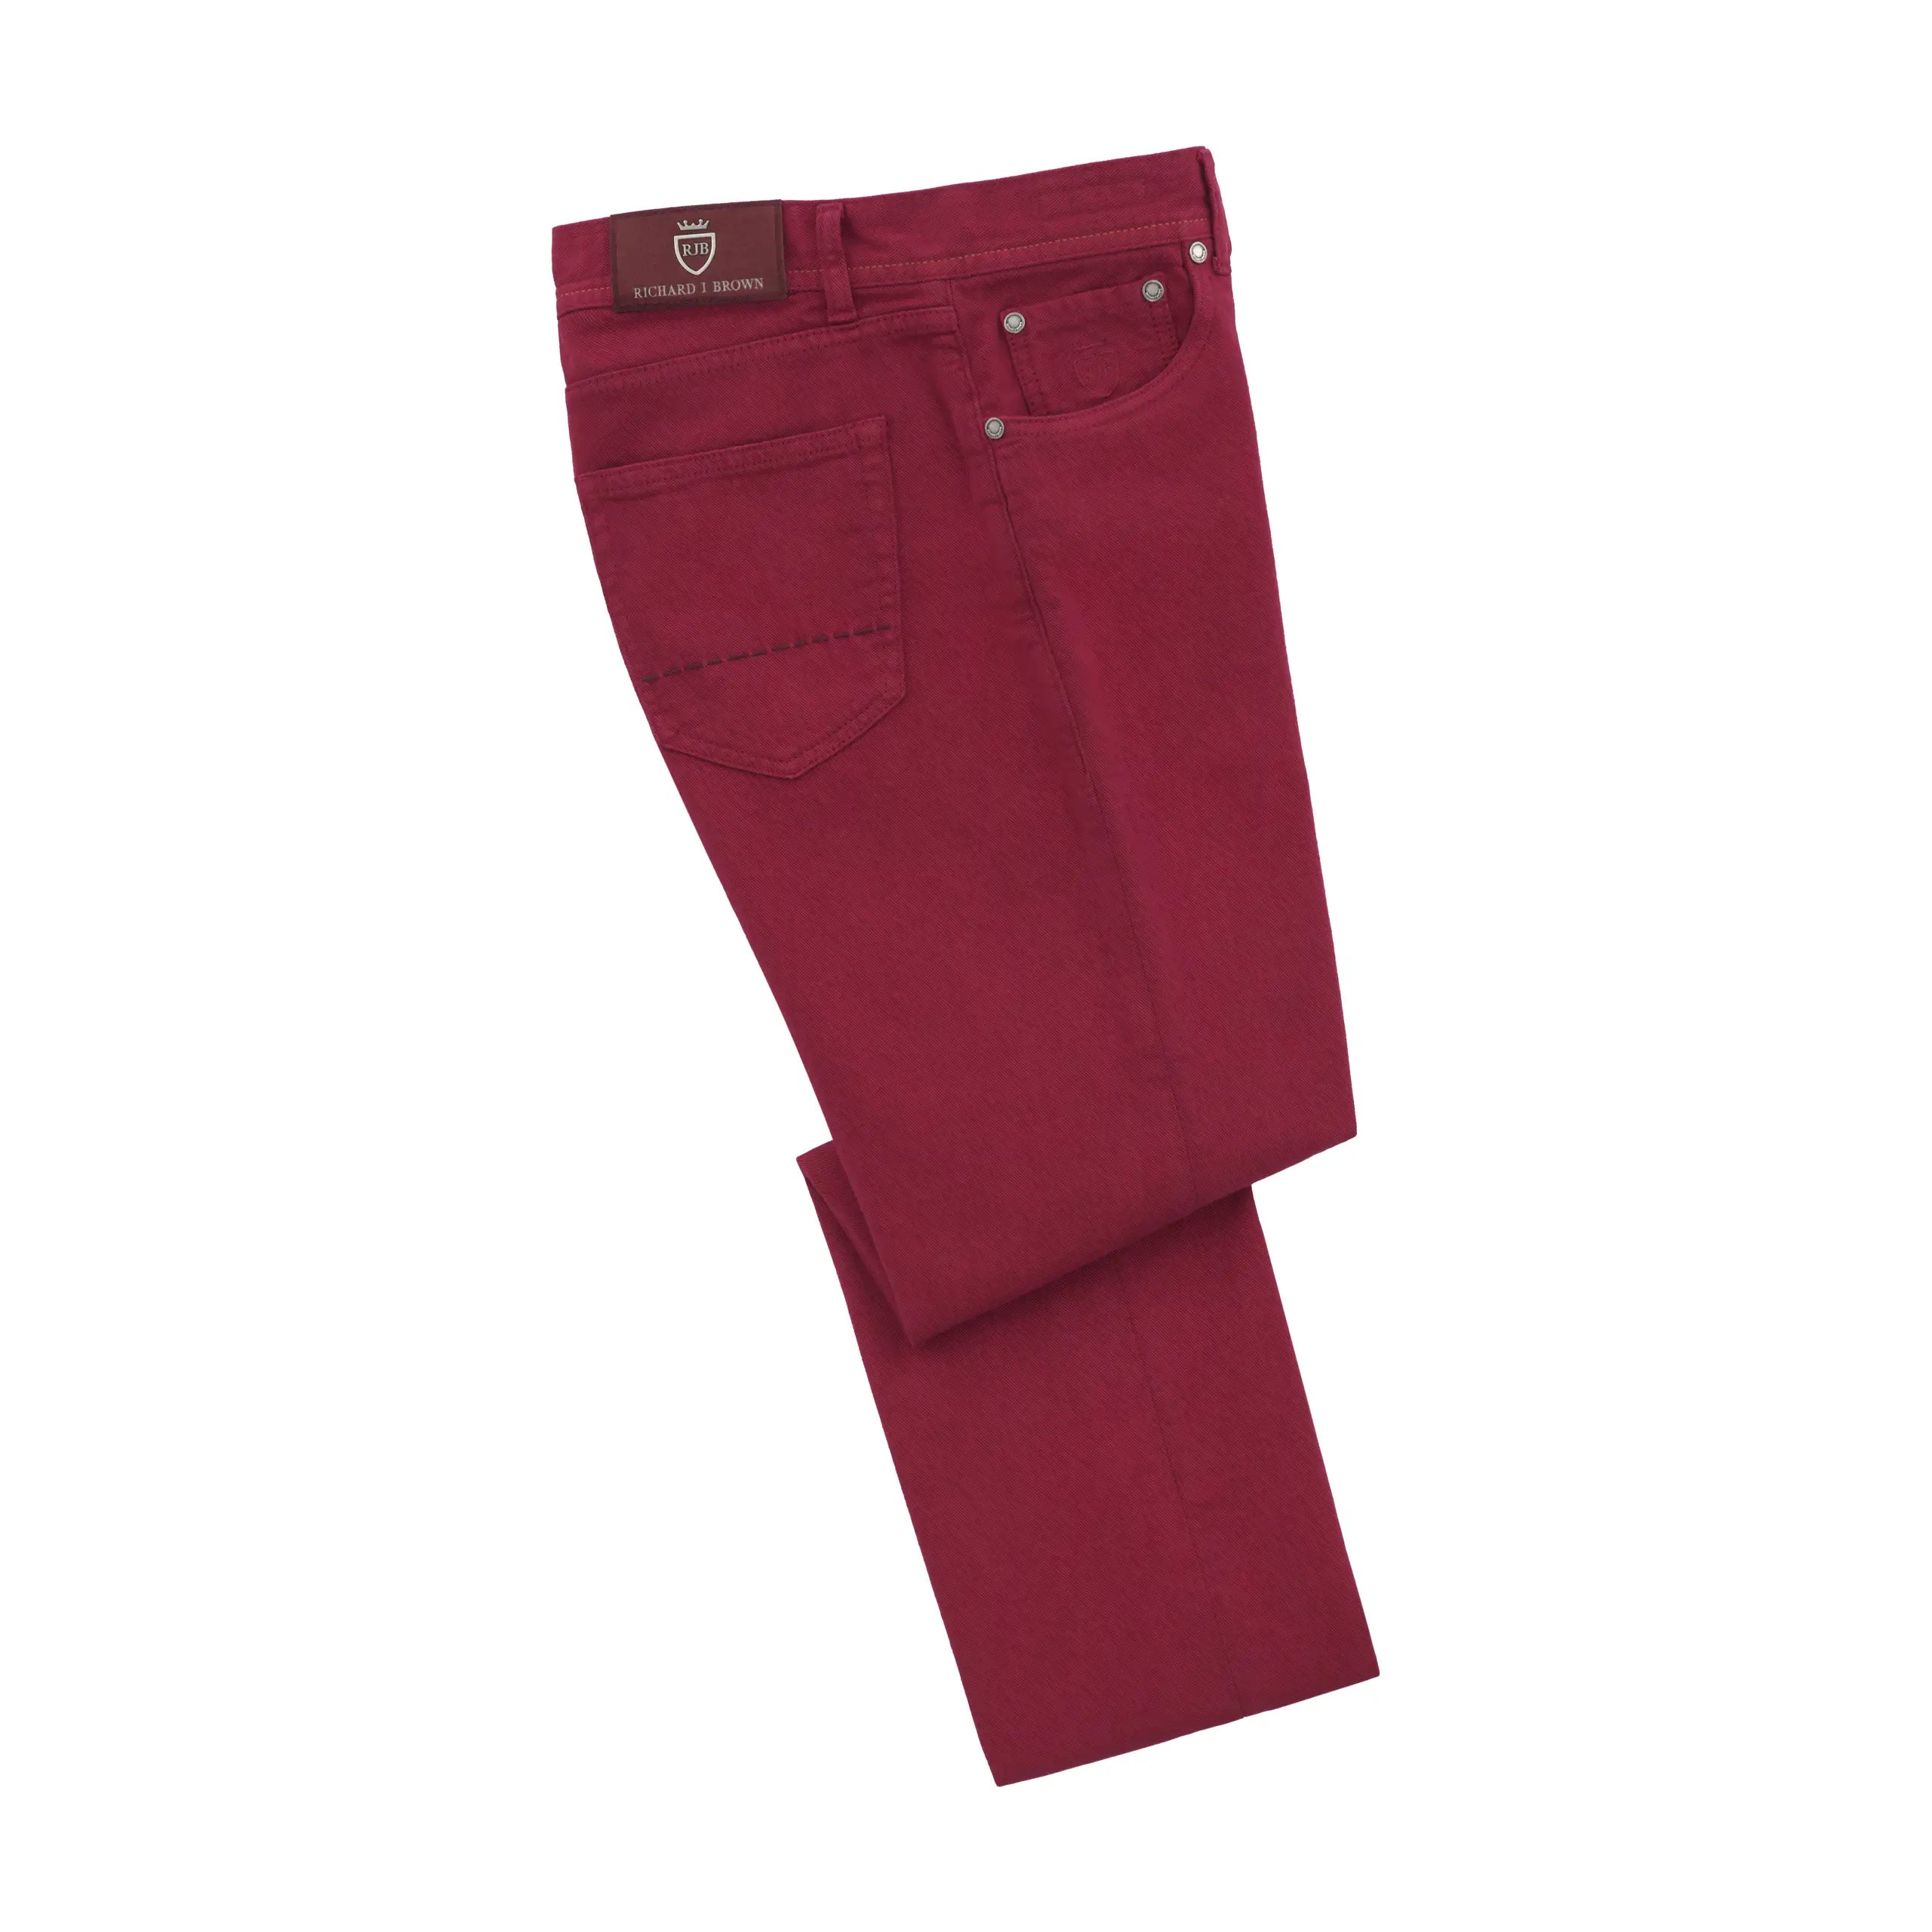 Jeans aus Baumwoll-Leinen-Mix in Kardinalrot